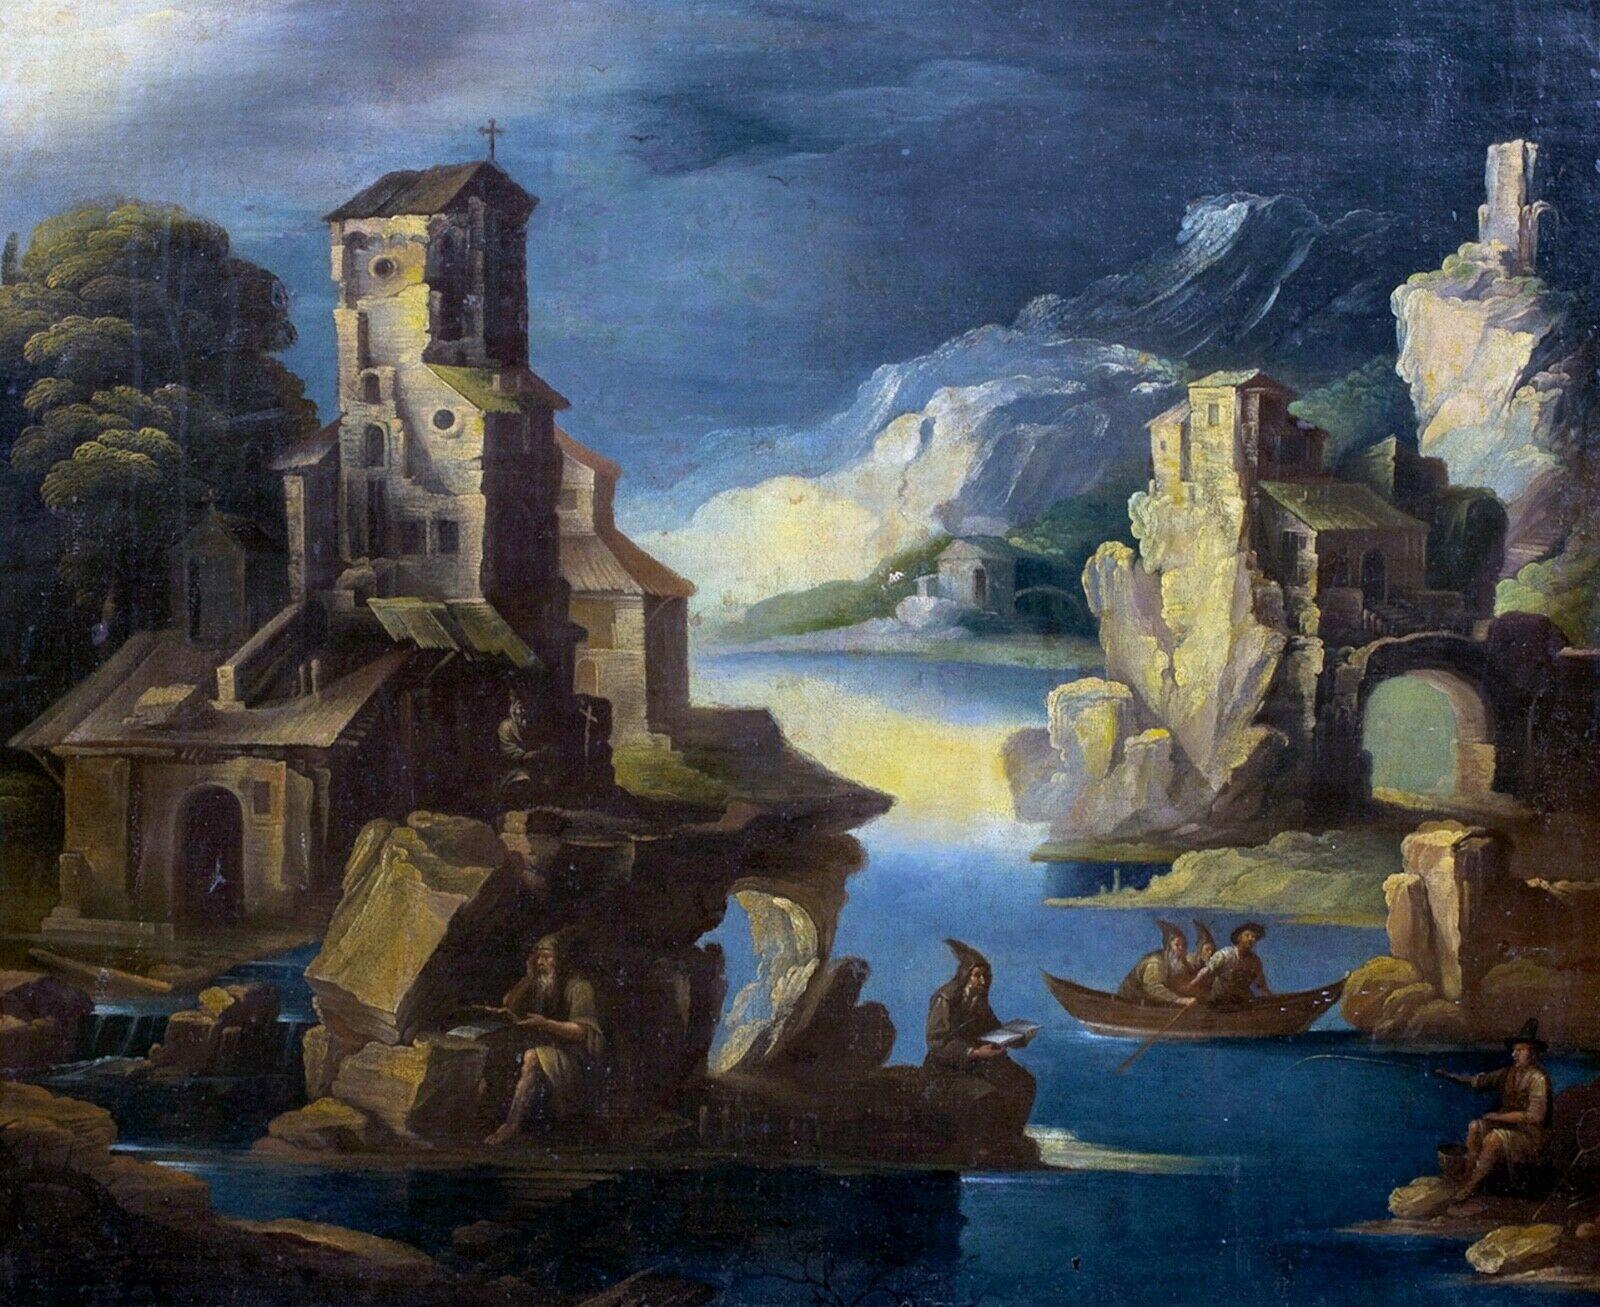 Unknown Landscape Painting - Monks In A Capriccio Rocky Landscape, 16th Century